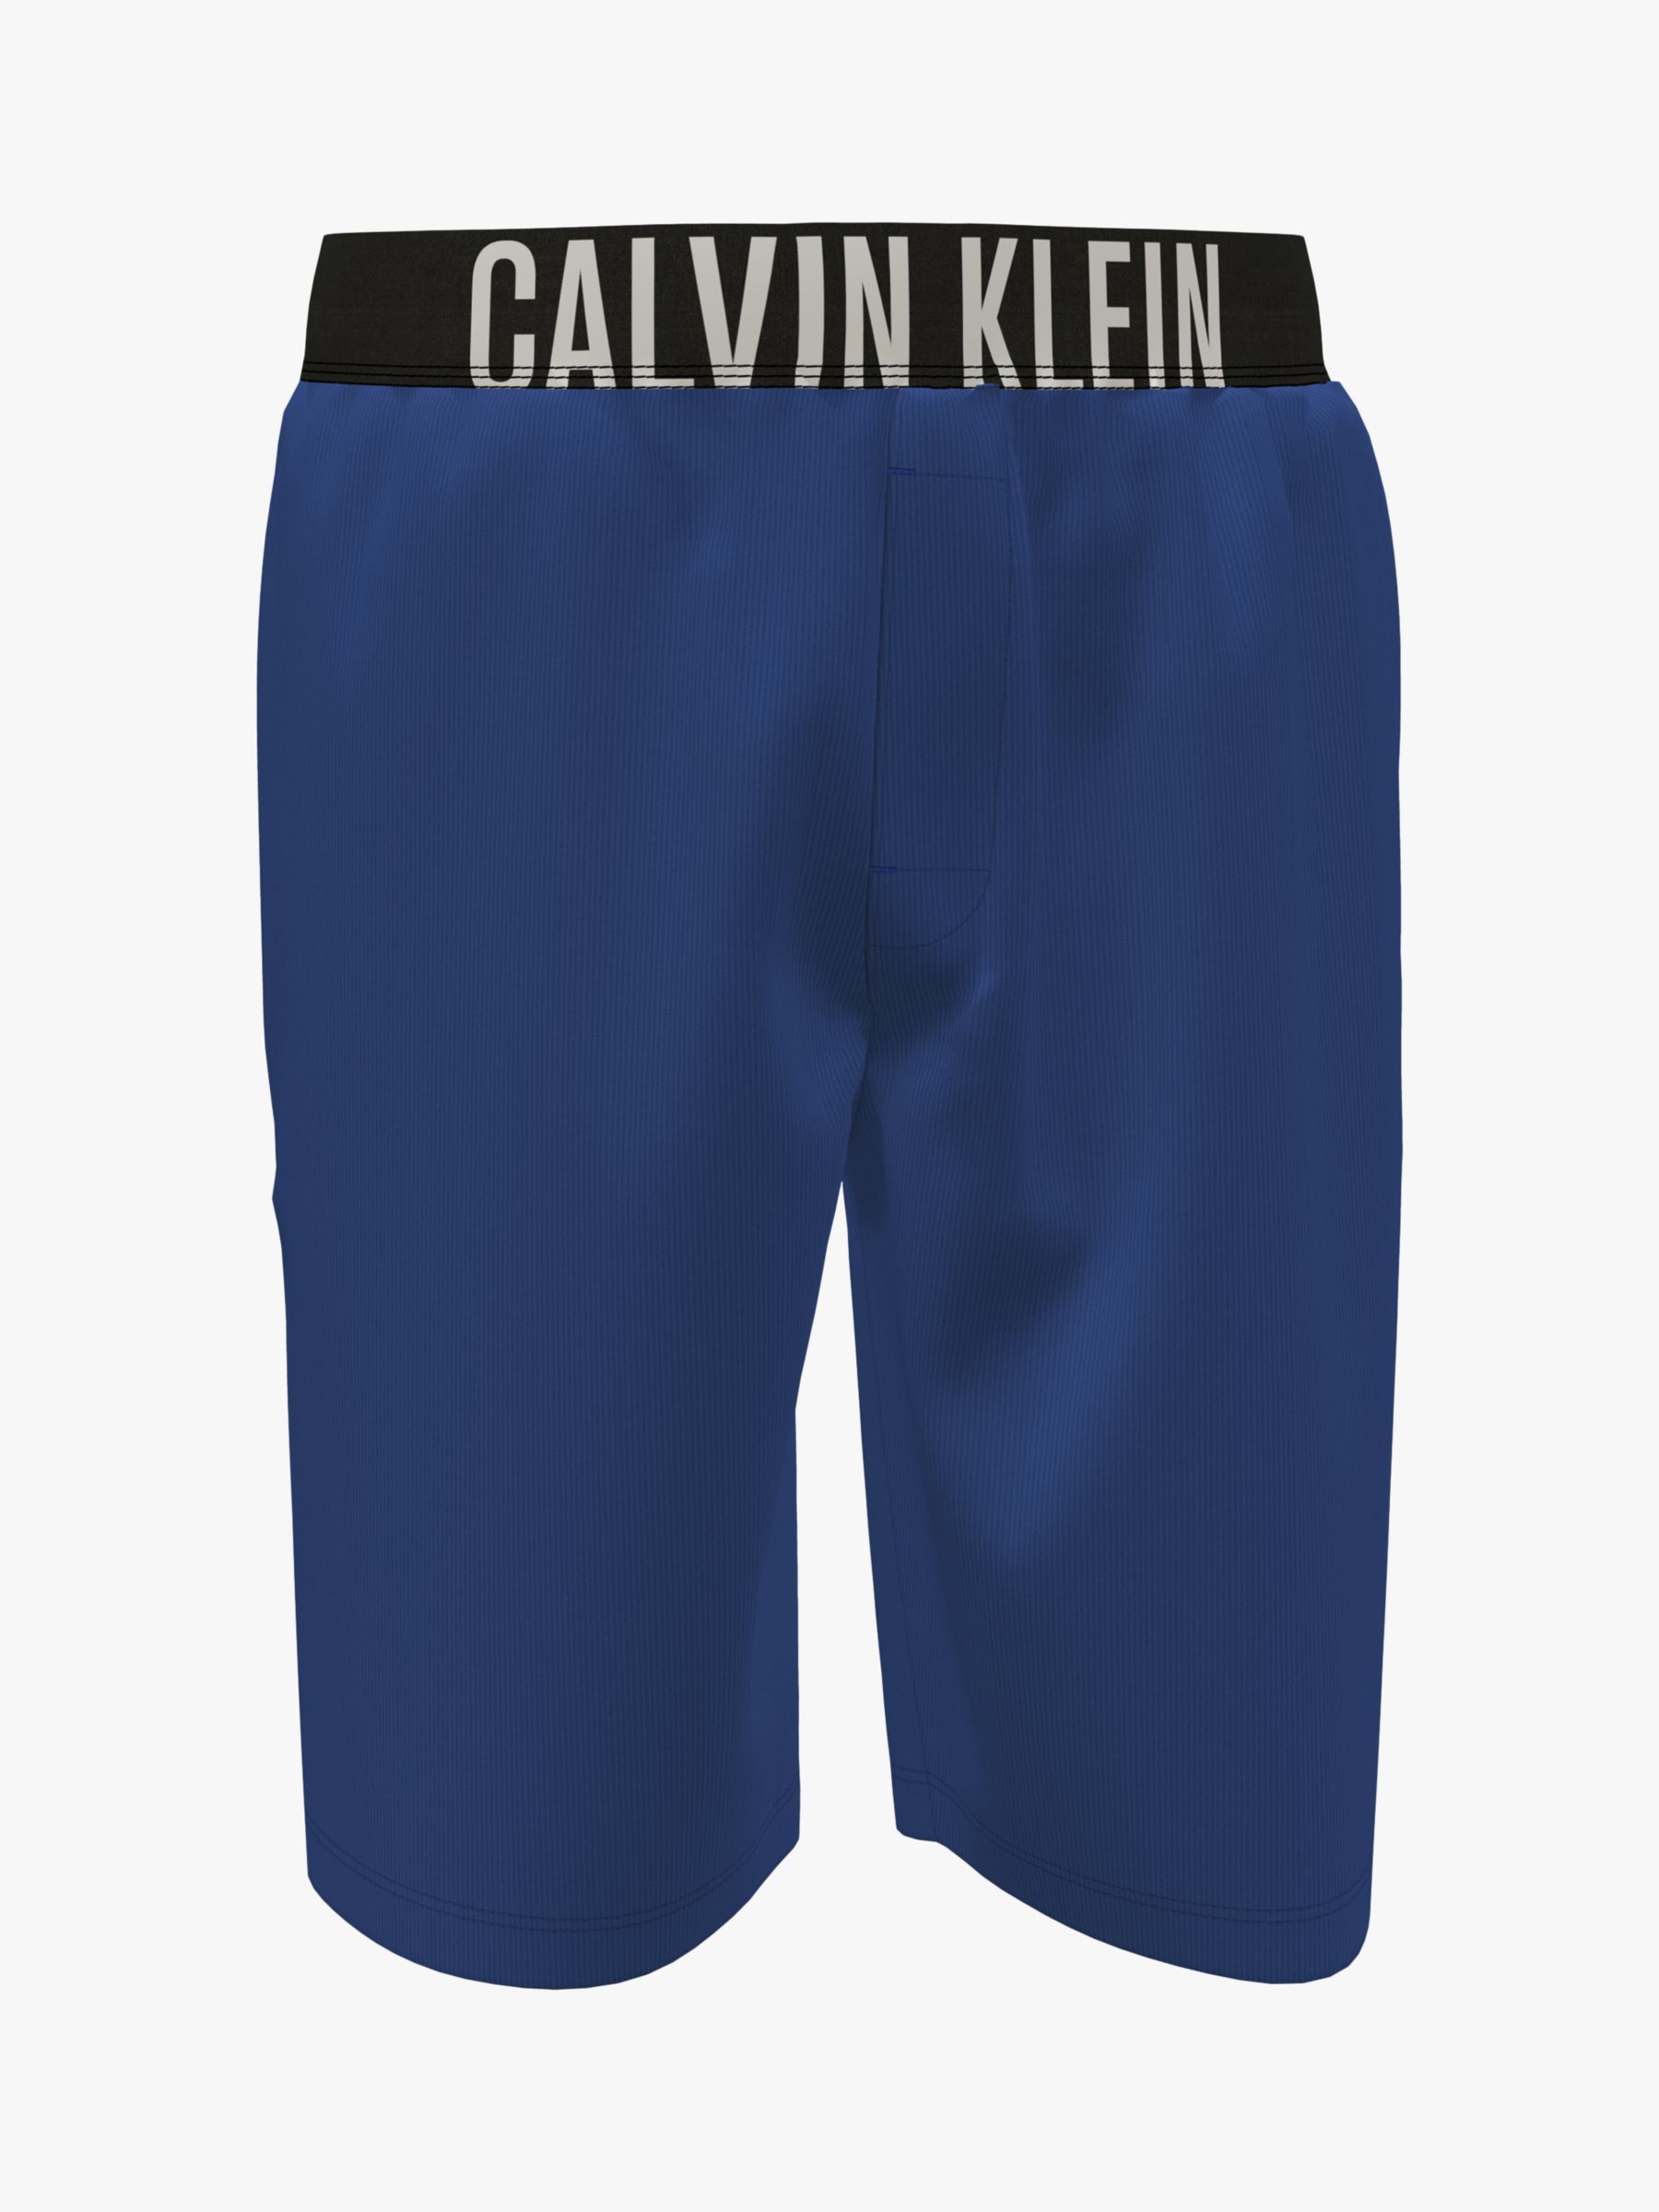 Calvin Klein Intense Lounge Shorts, Providence Blue